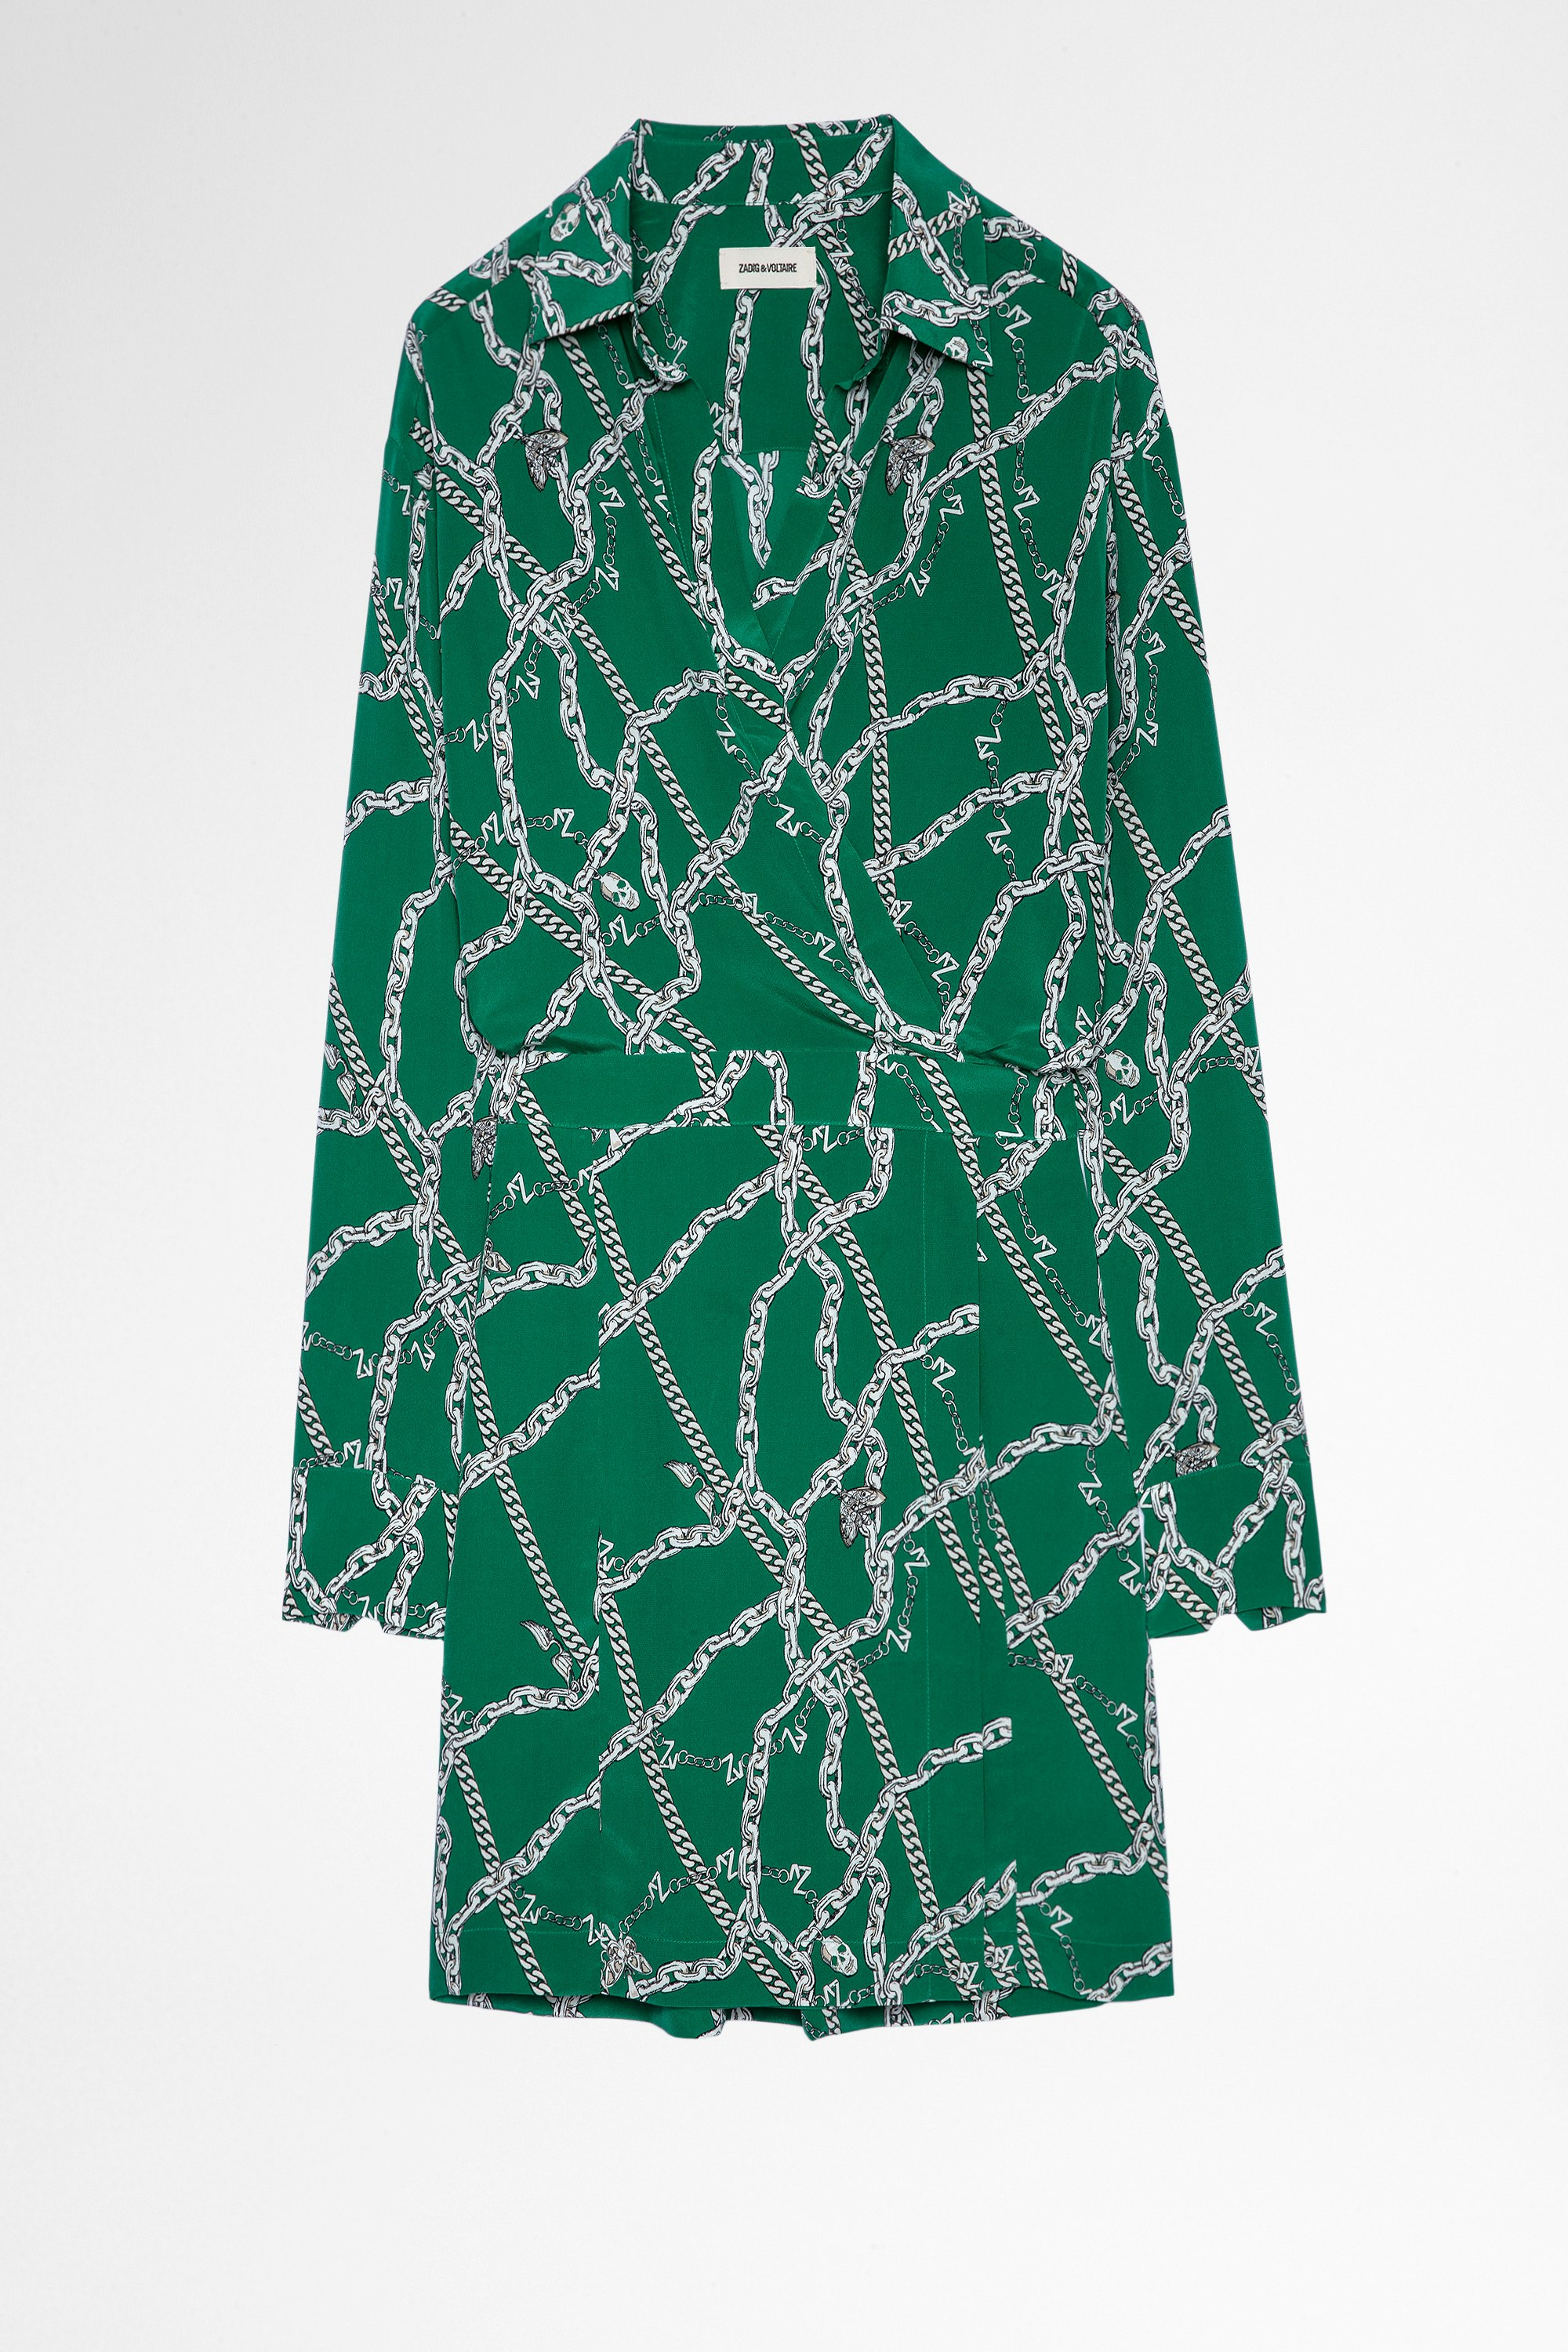 Ravy Dress Silk Women's green silk dress with chain pattern